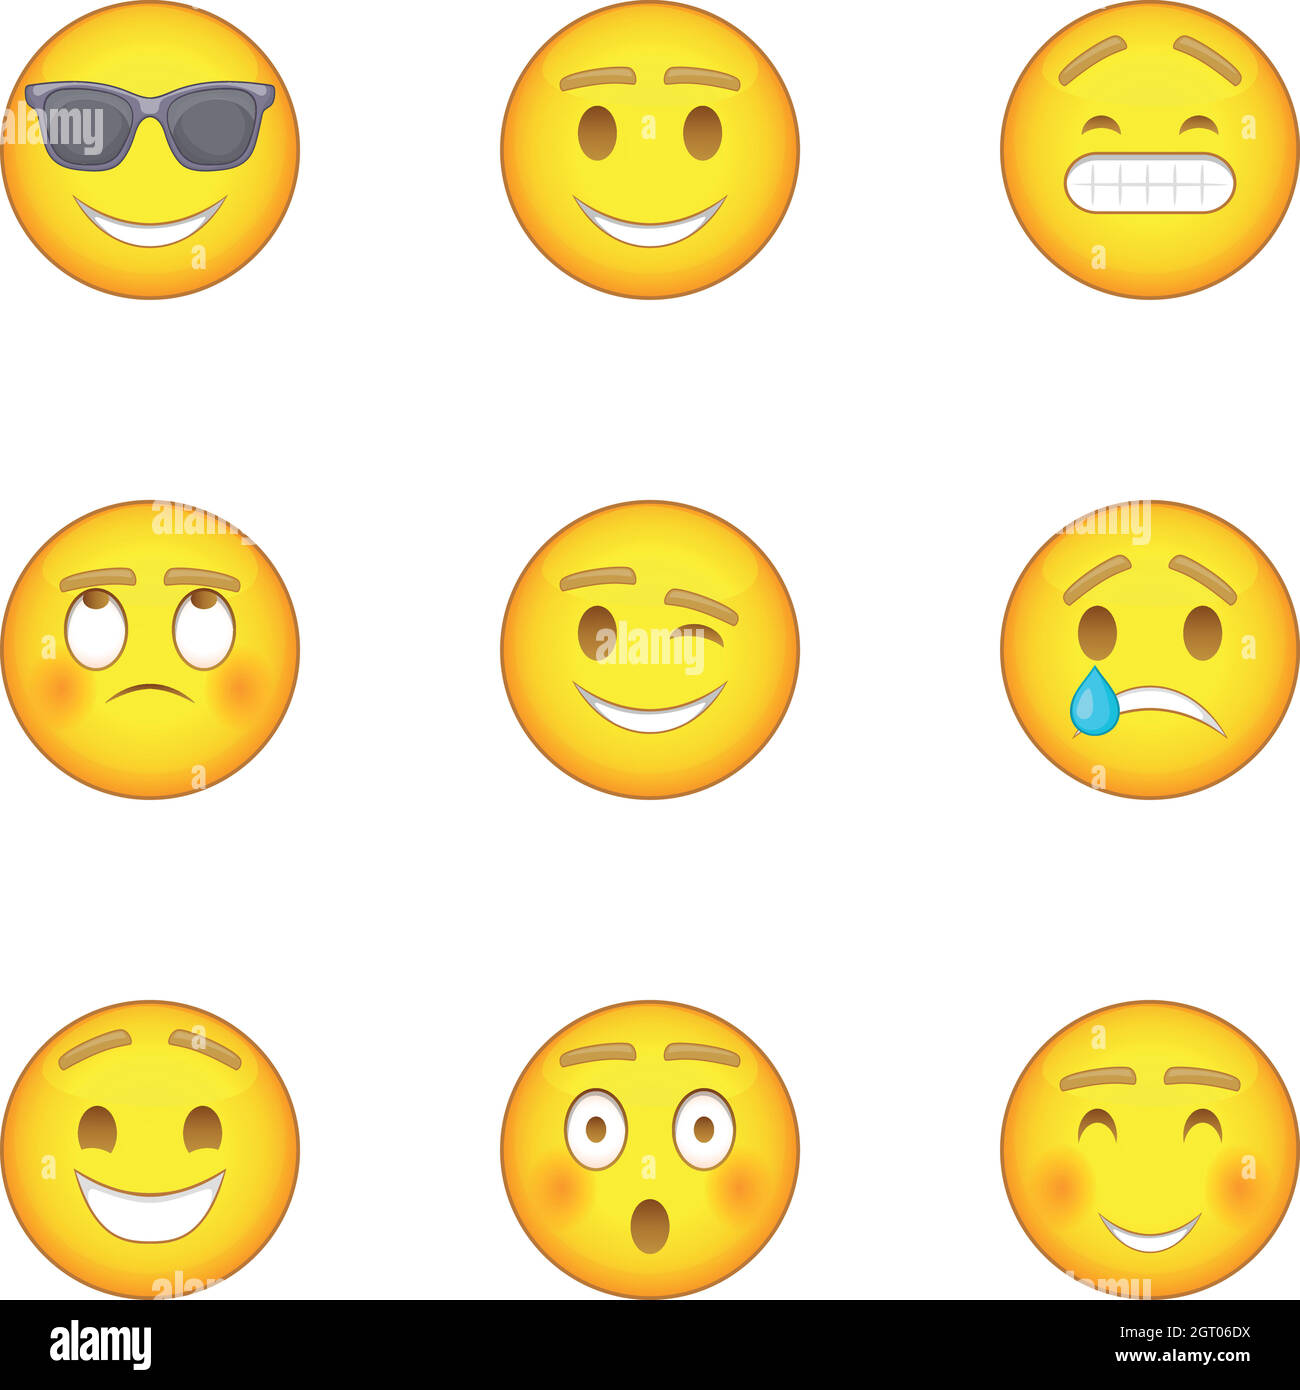 Emoji character icons set, cartoon style Stock Vector